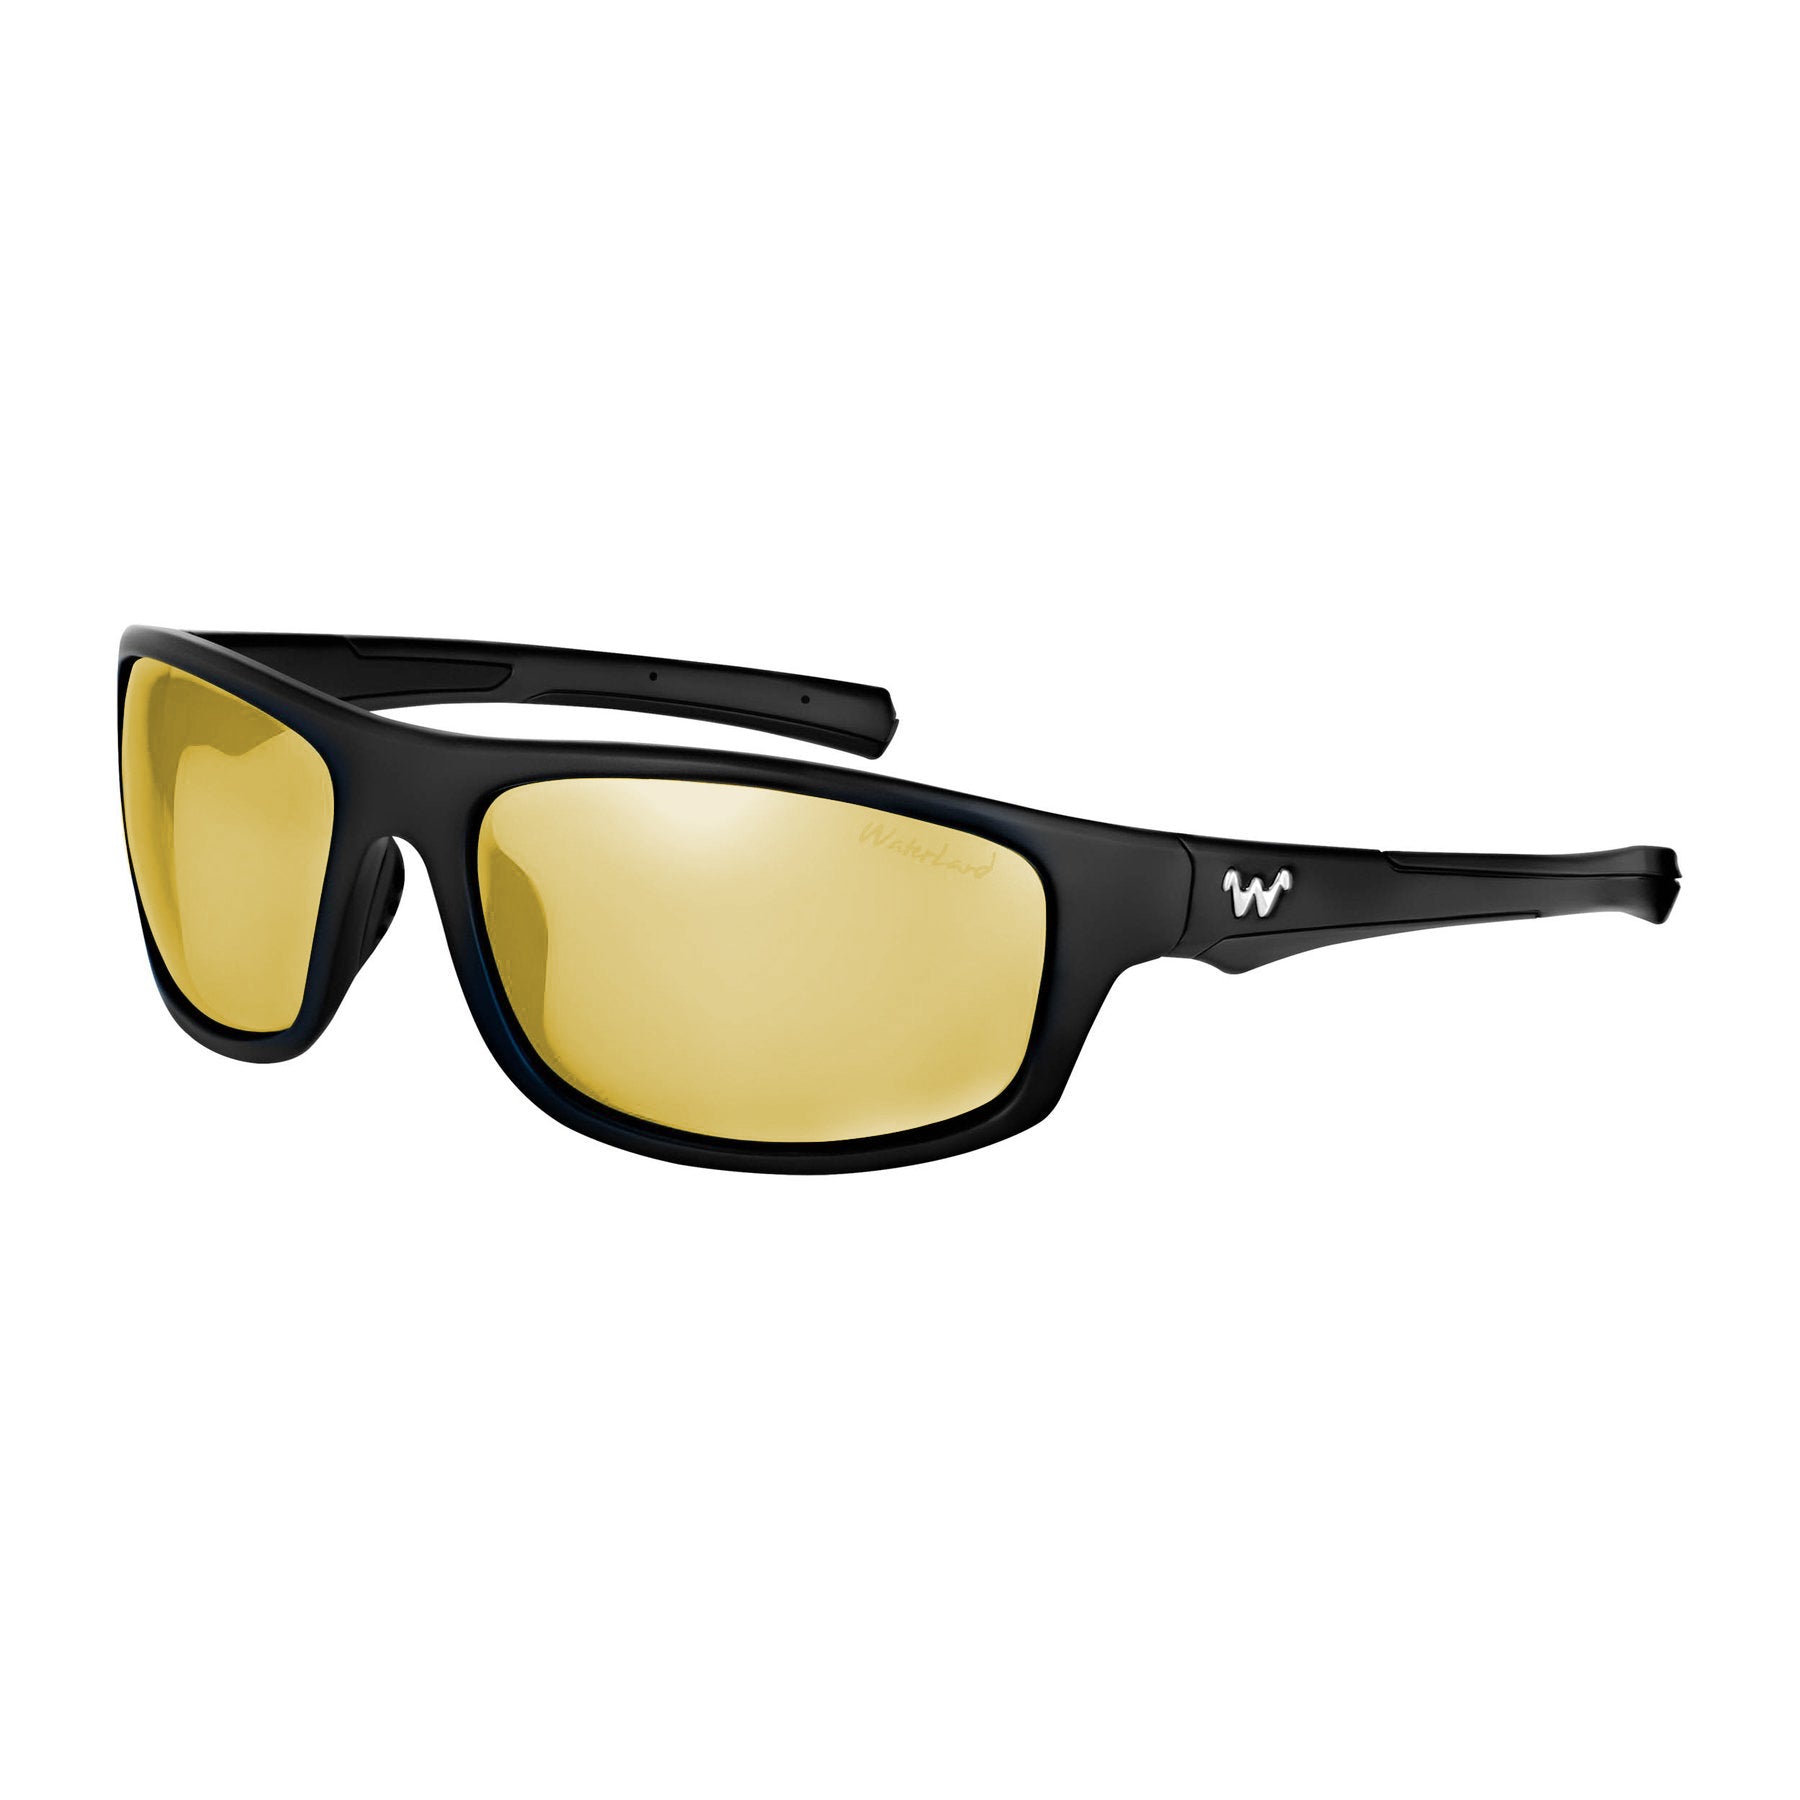 Waterland Polarized Sunglasses - Hasket Series - Matte Black Green Mirror / Waterland Mineral Glass